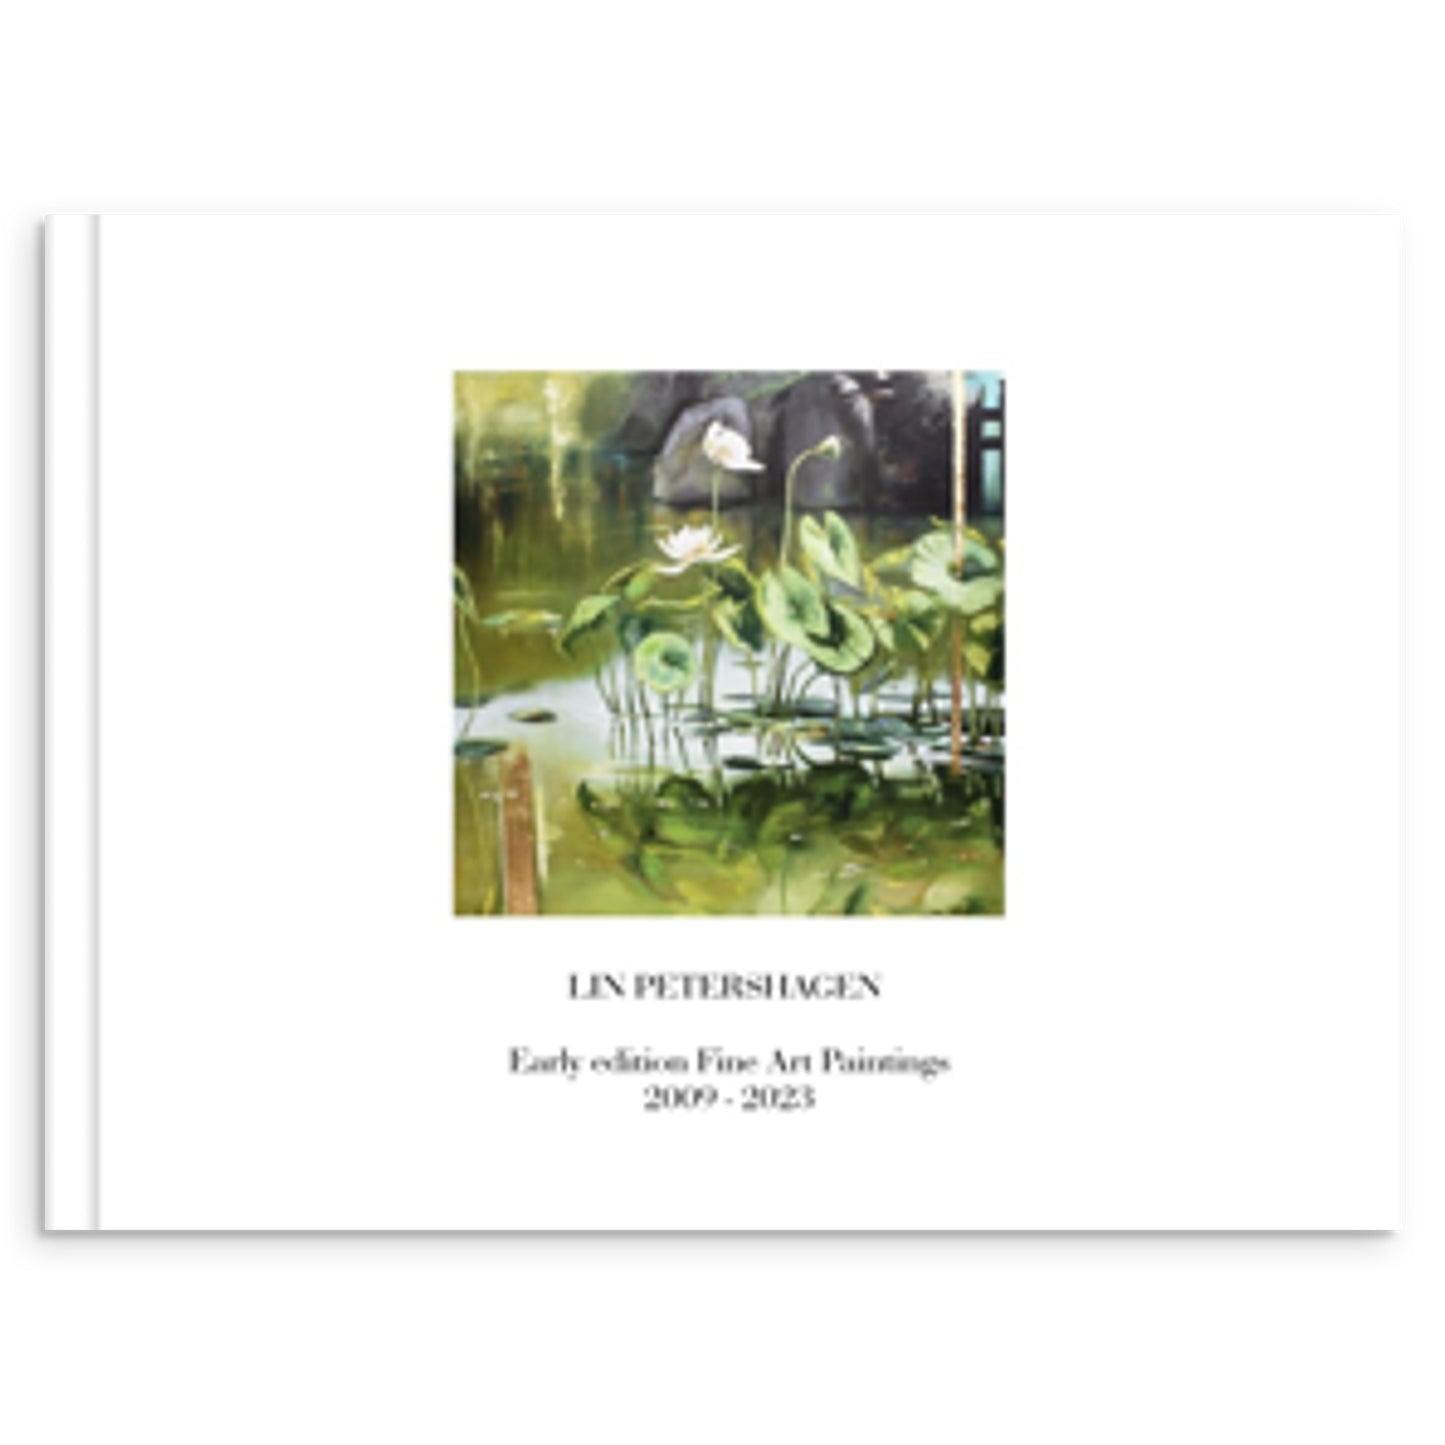 Lin Petershagen - Early Edition Fine Art Paintings (Year 2009 - 2023)